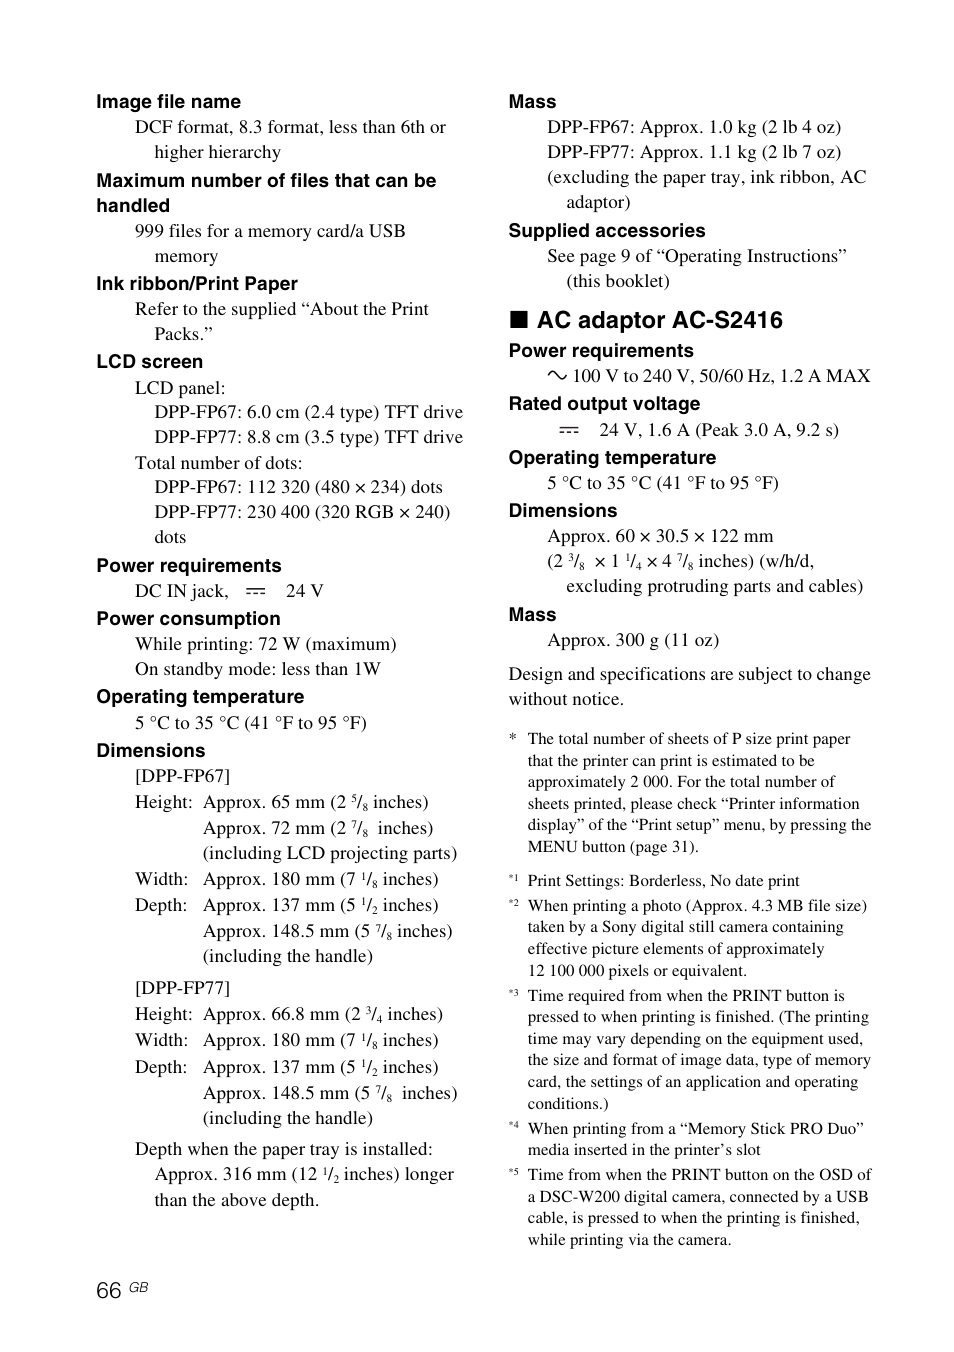 X ac adaptor ac-s2416 | Sony DPP-FP77 User Manual | Page 66 / 72